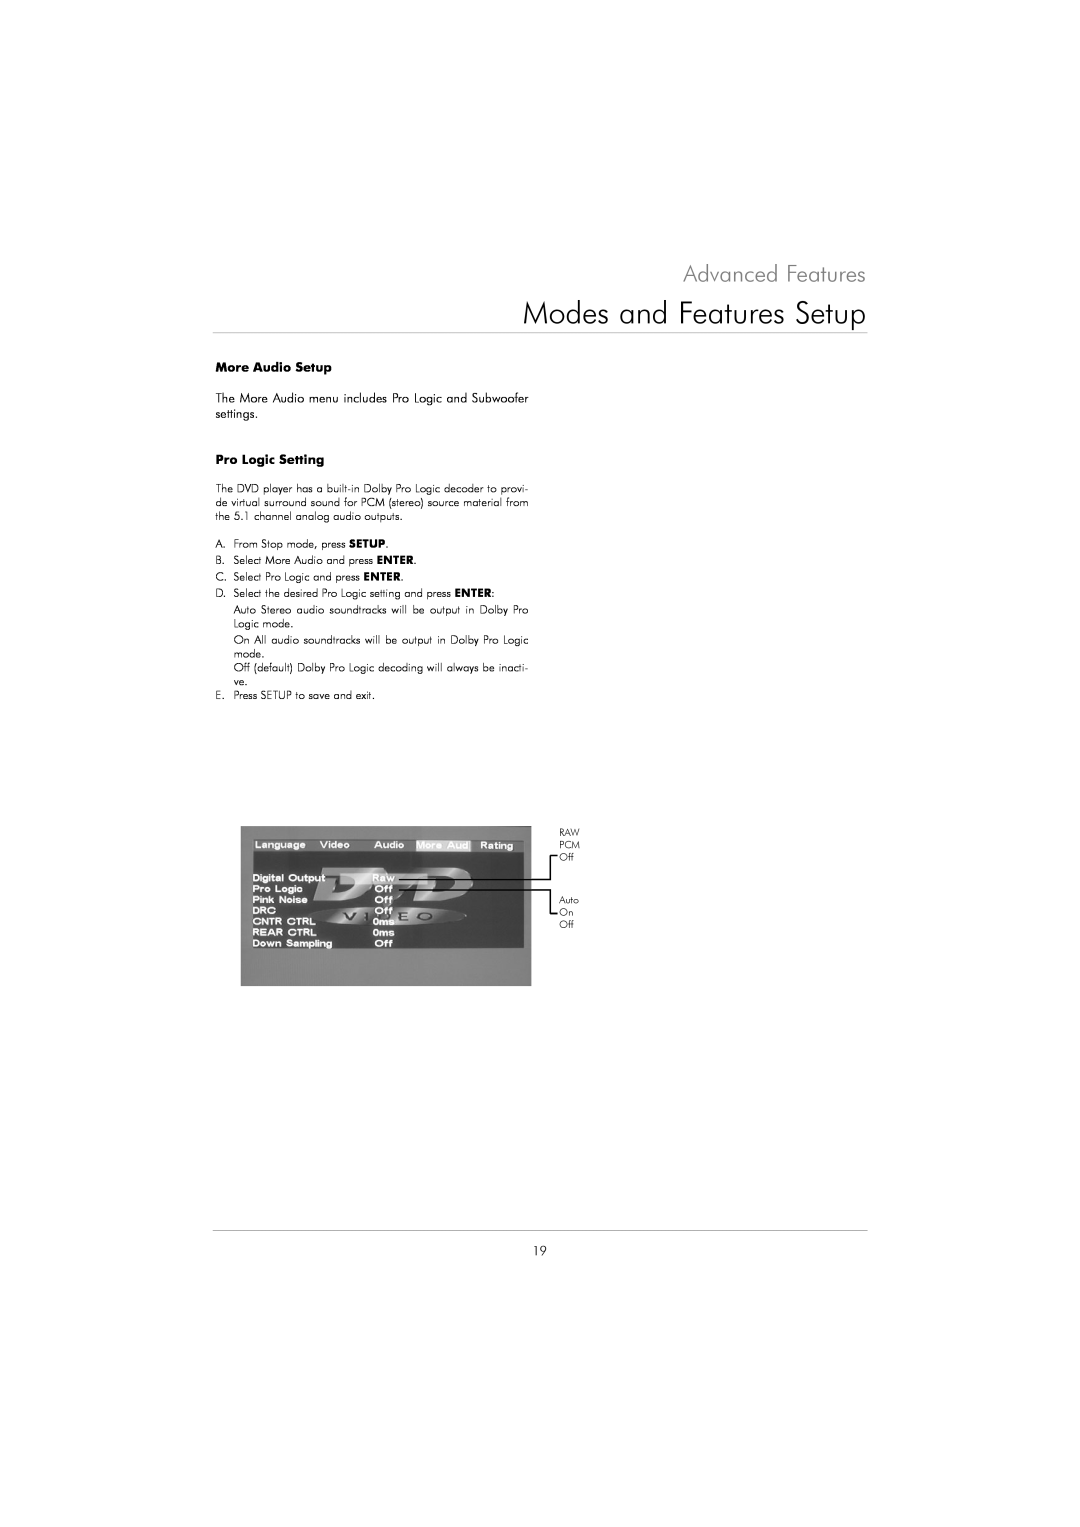 Kodak DVD 40 user manual More Audio Setup, Pro Logic Setting, Modes and Features Setup, Advanced Features 